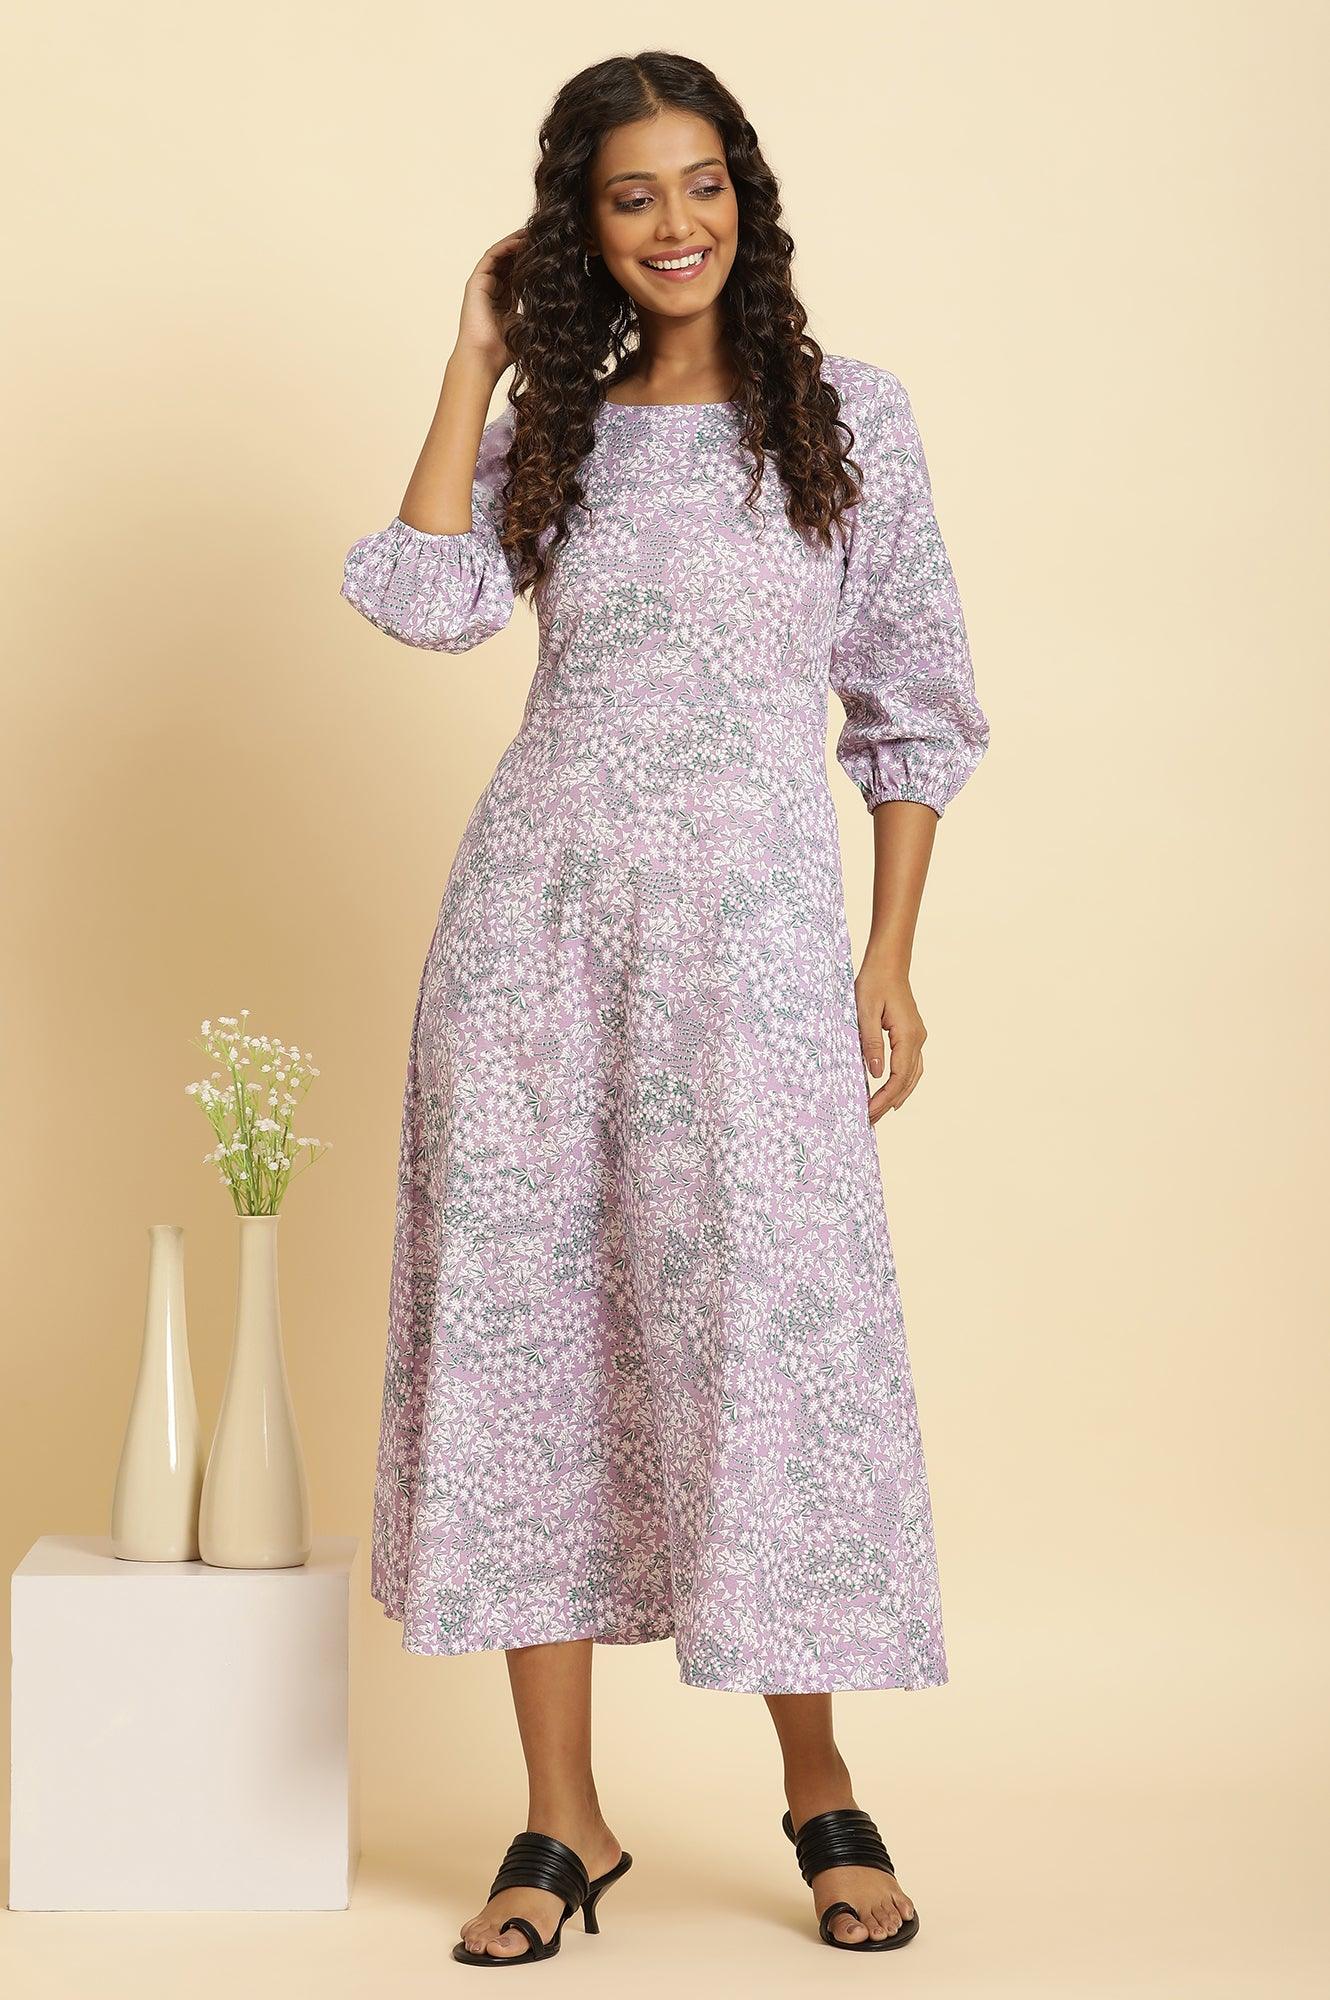 Purple Floral Printed Flared Long Dress - wforwoman